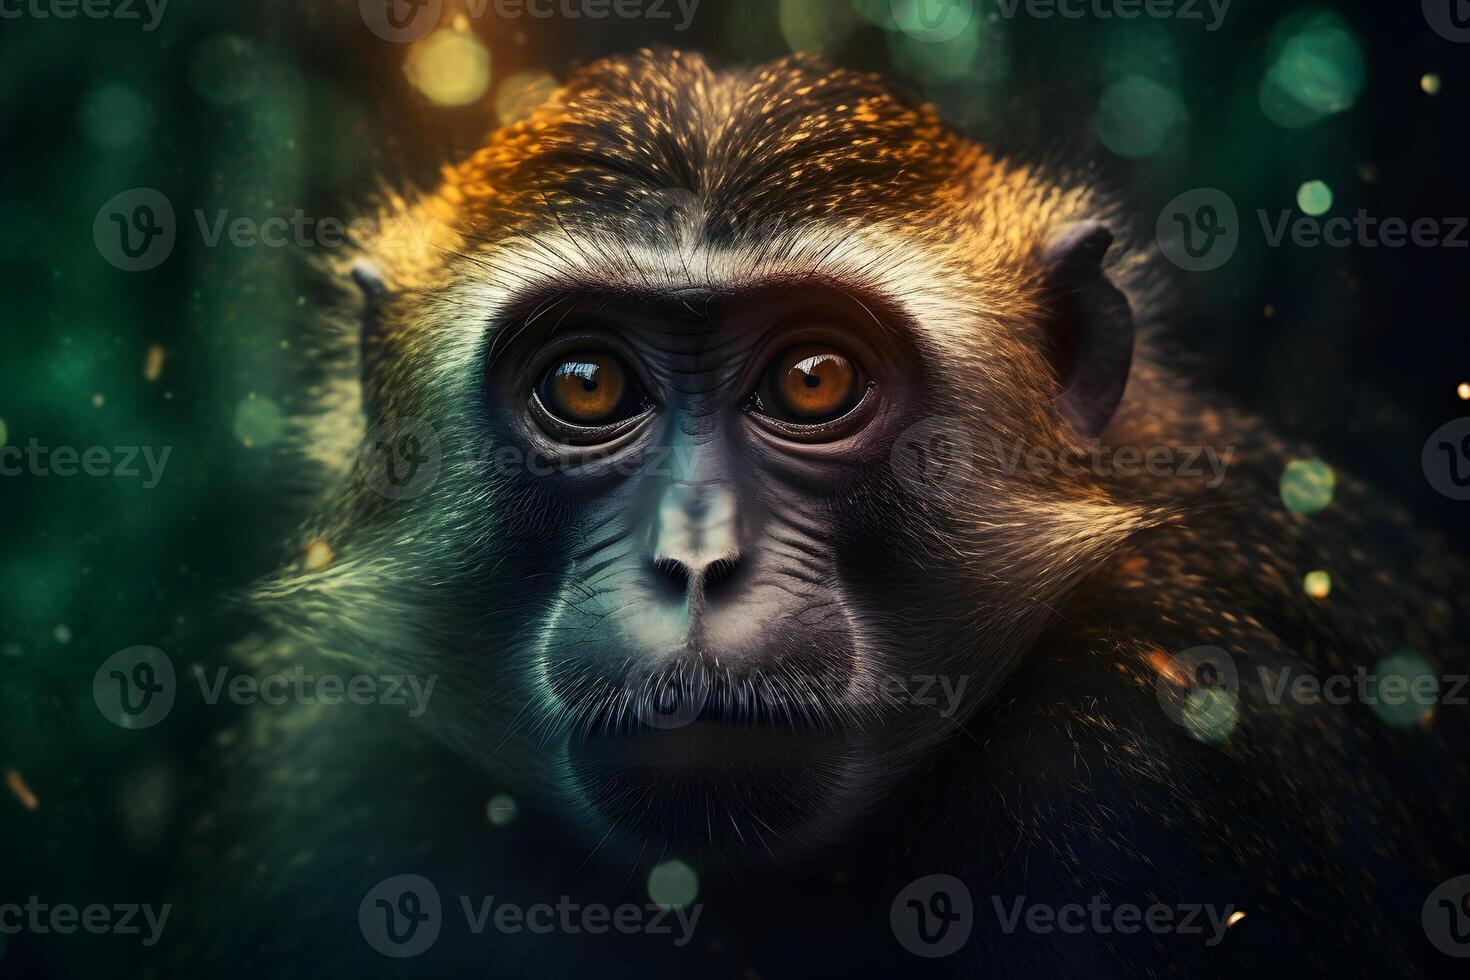 Monkey portrait. Neural network photo